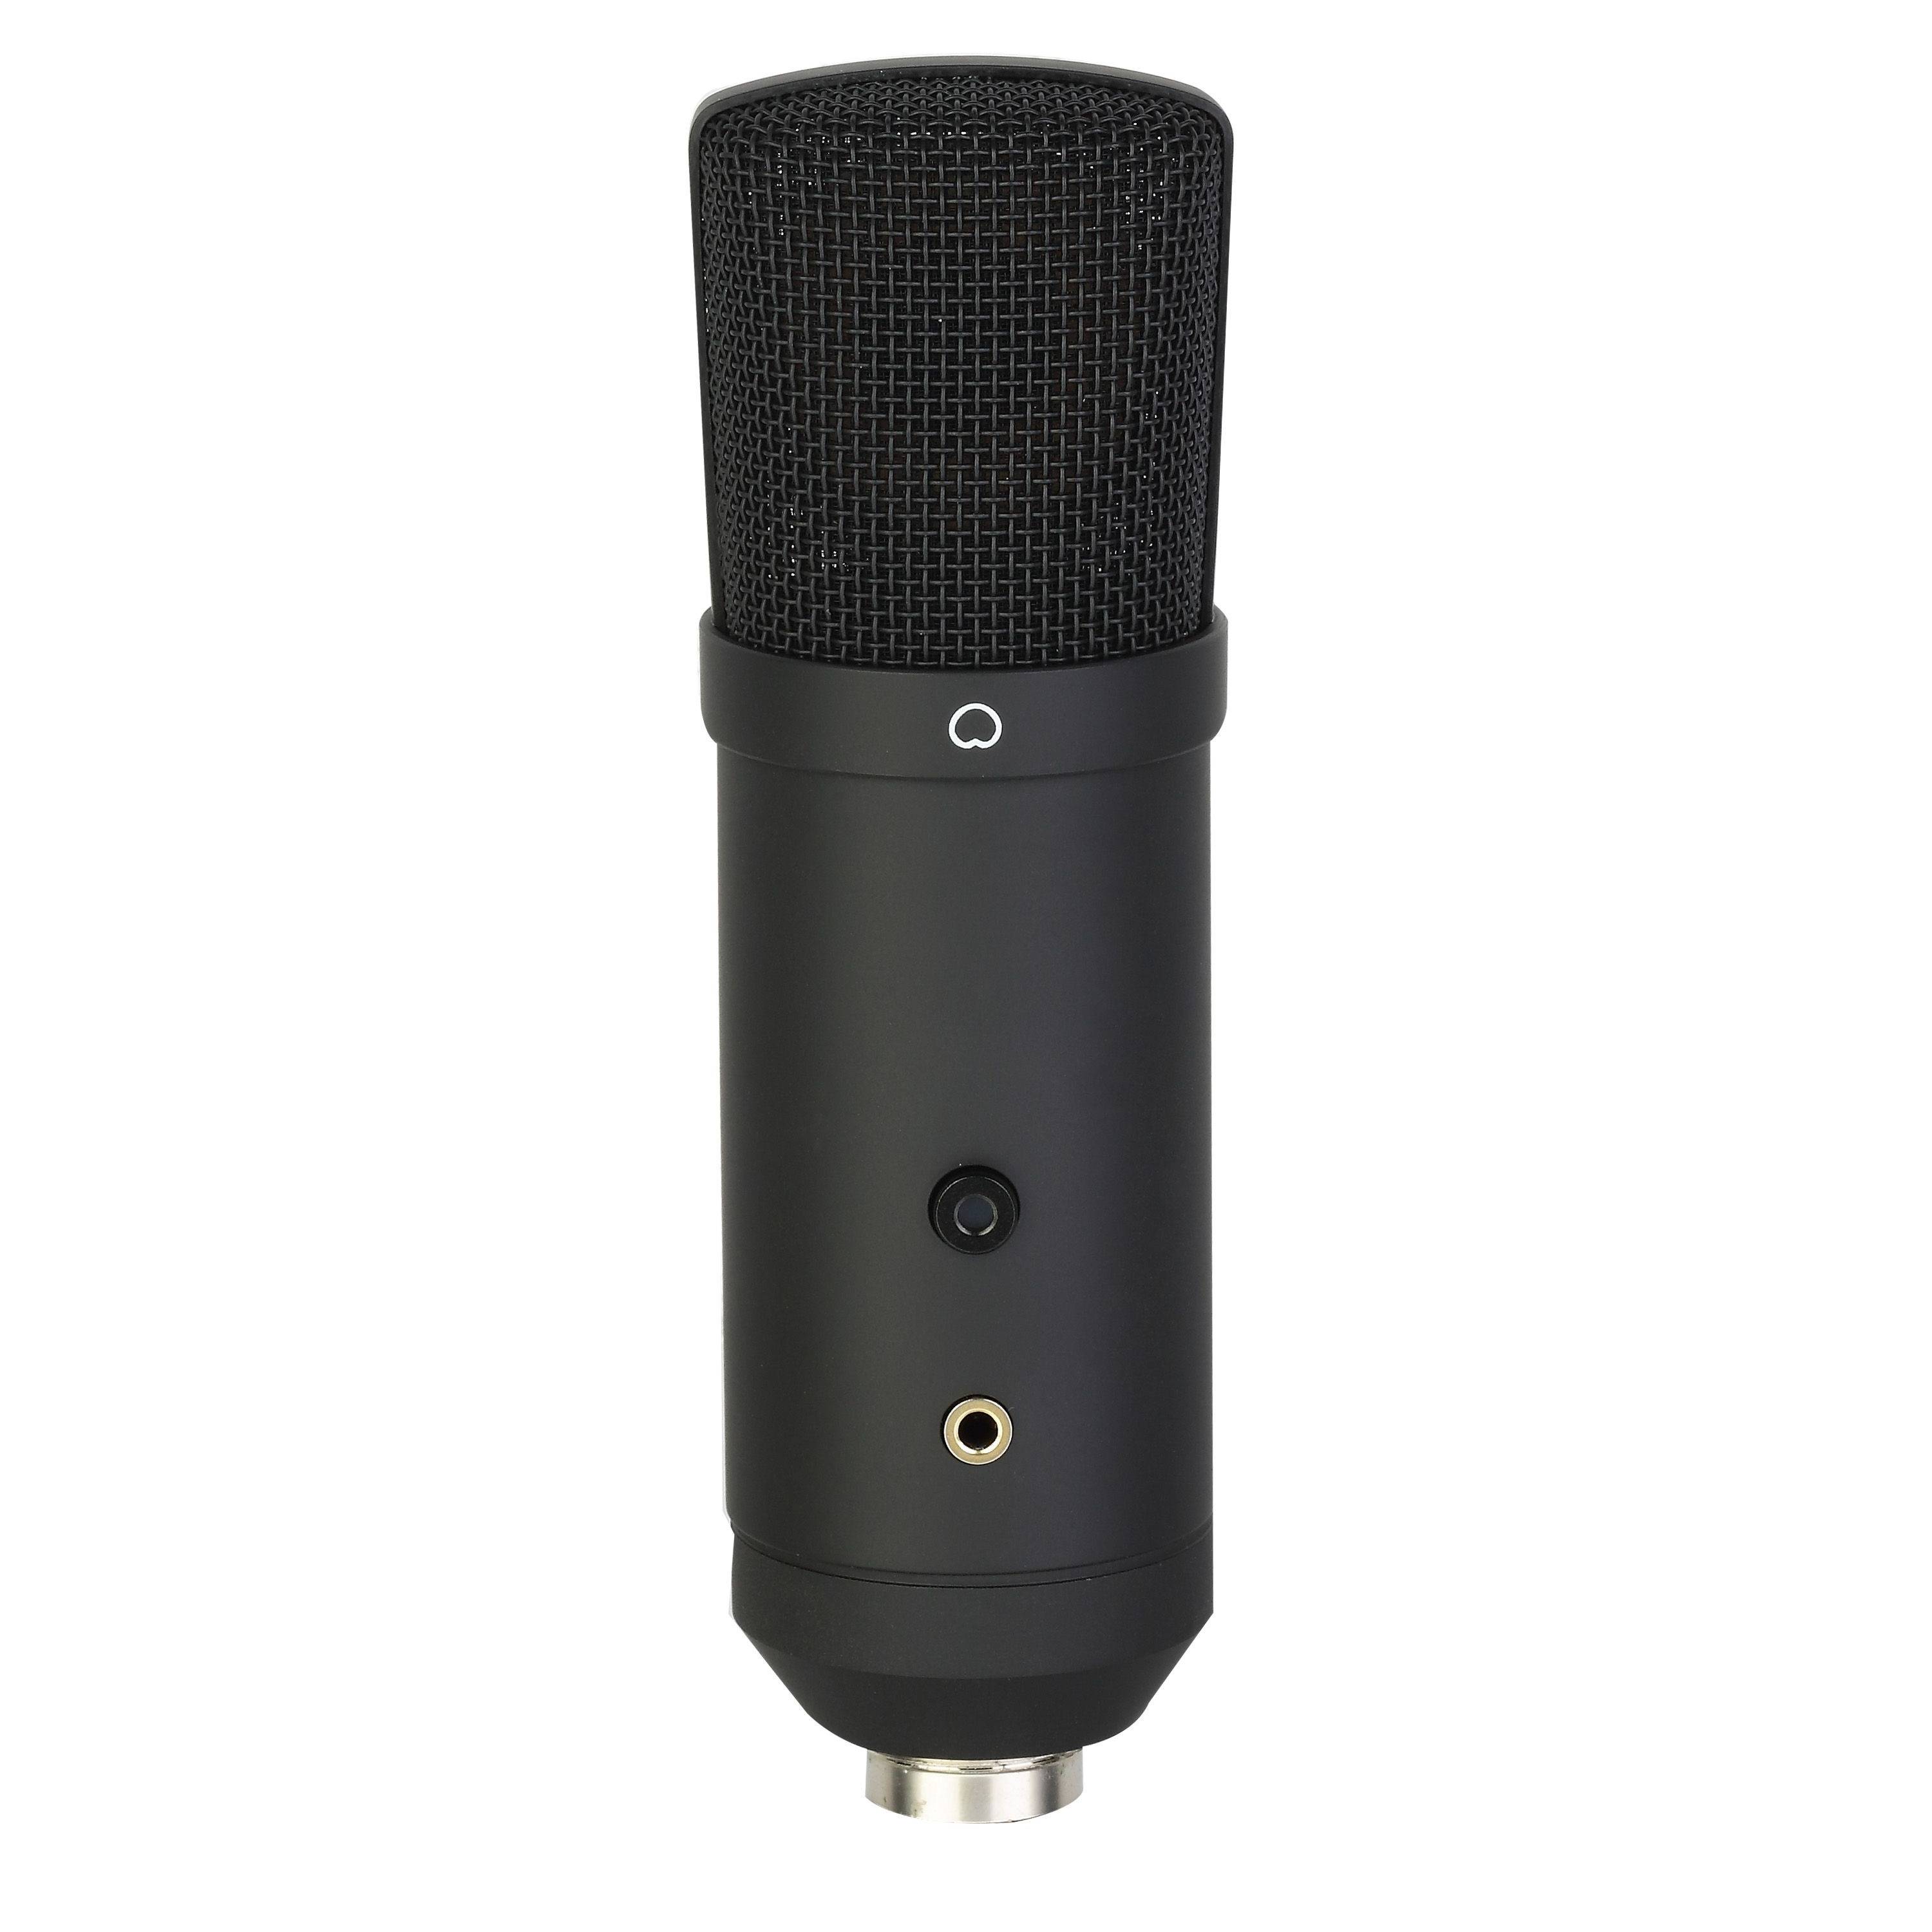 USM001 φ14mm condenser capsule Uni-directional AD/DA Conversion Professional USB Studio Microphone